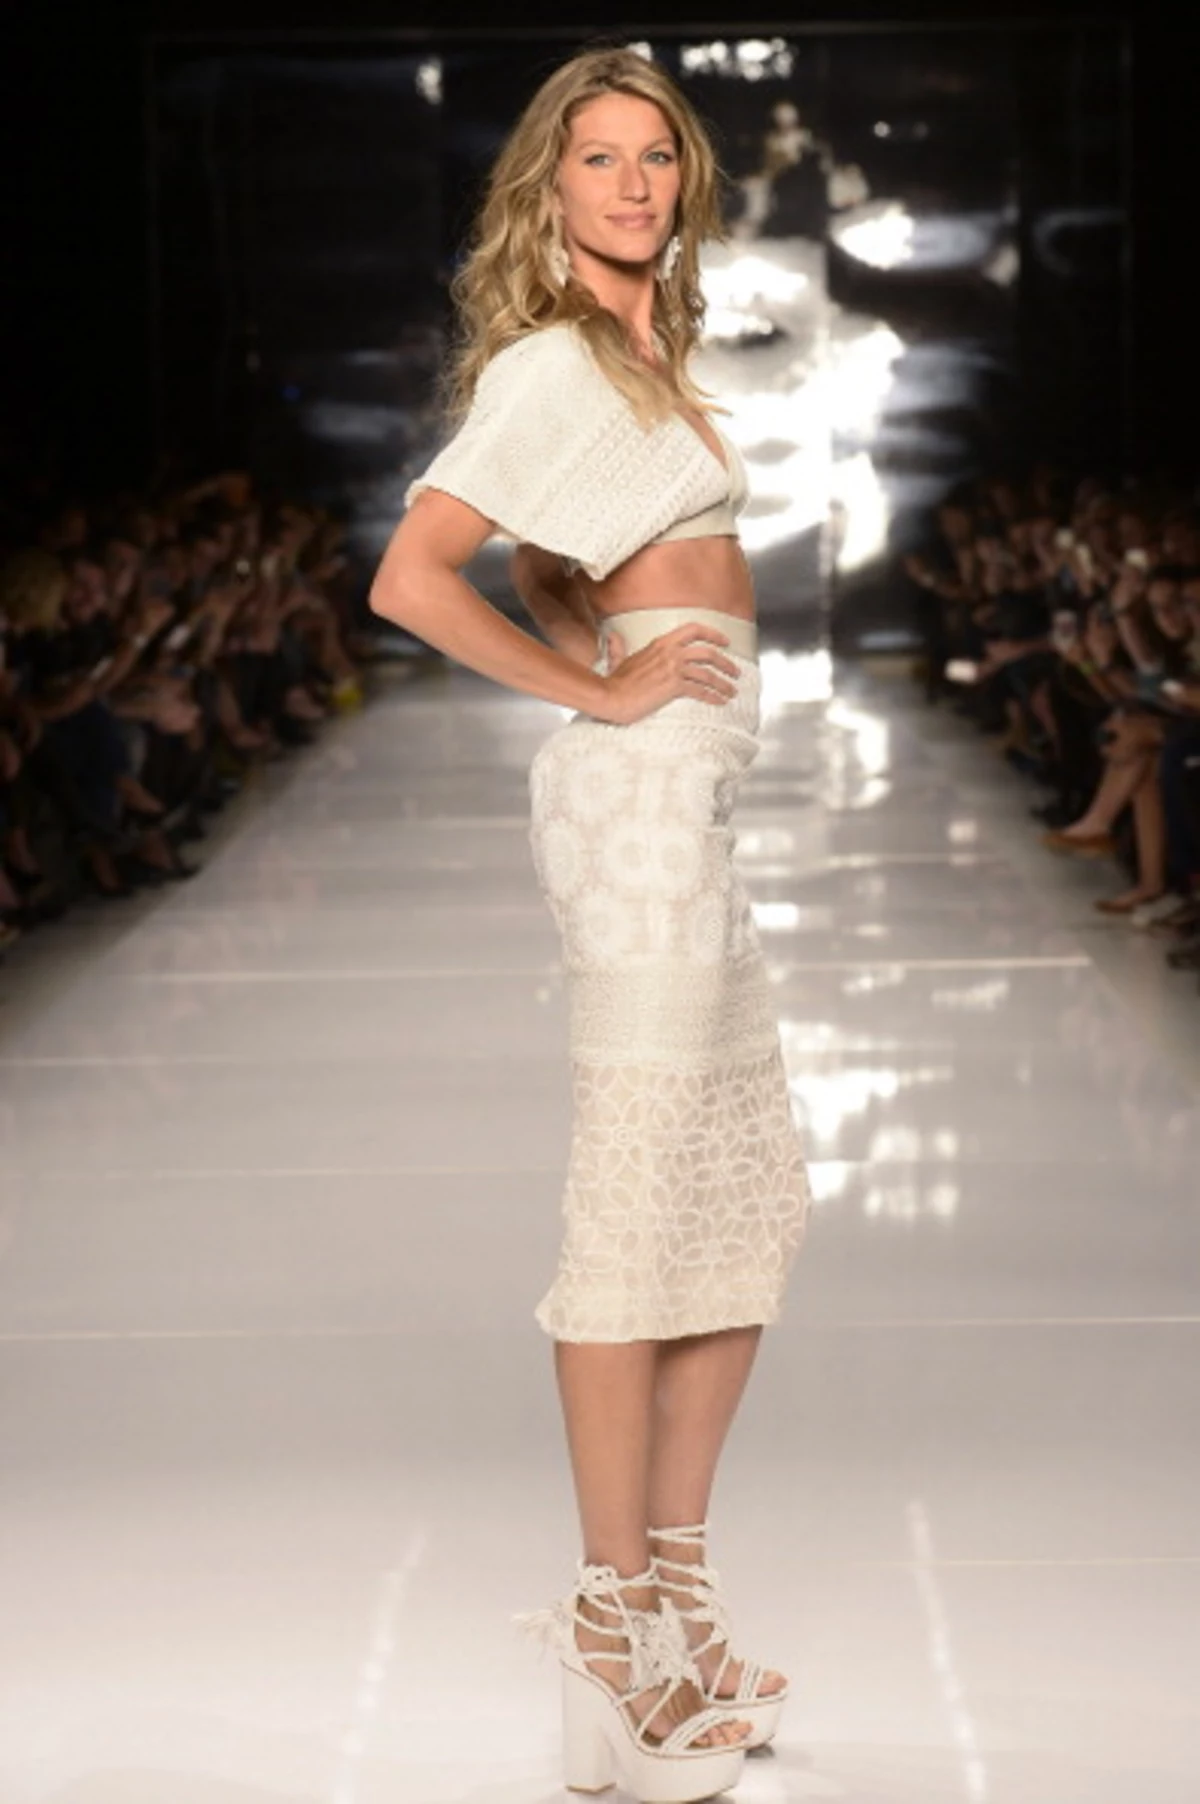 Gisele Bundchen Walks Her Last Runway Show During Brazil Fashion Week